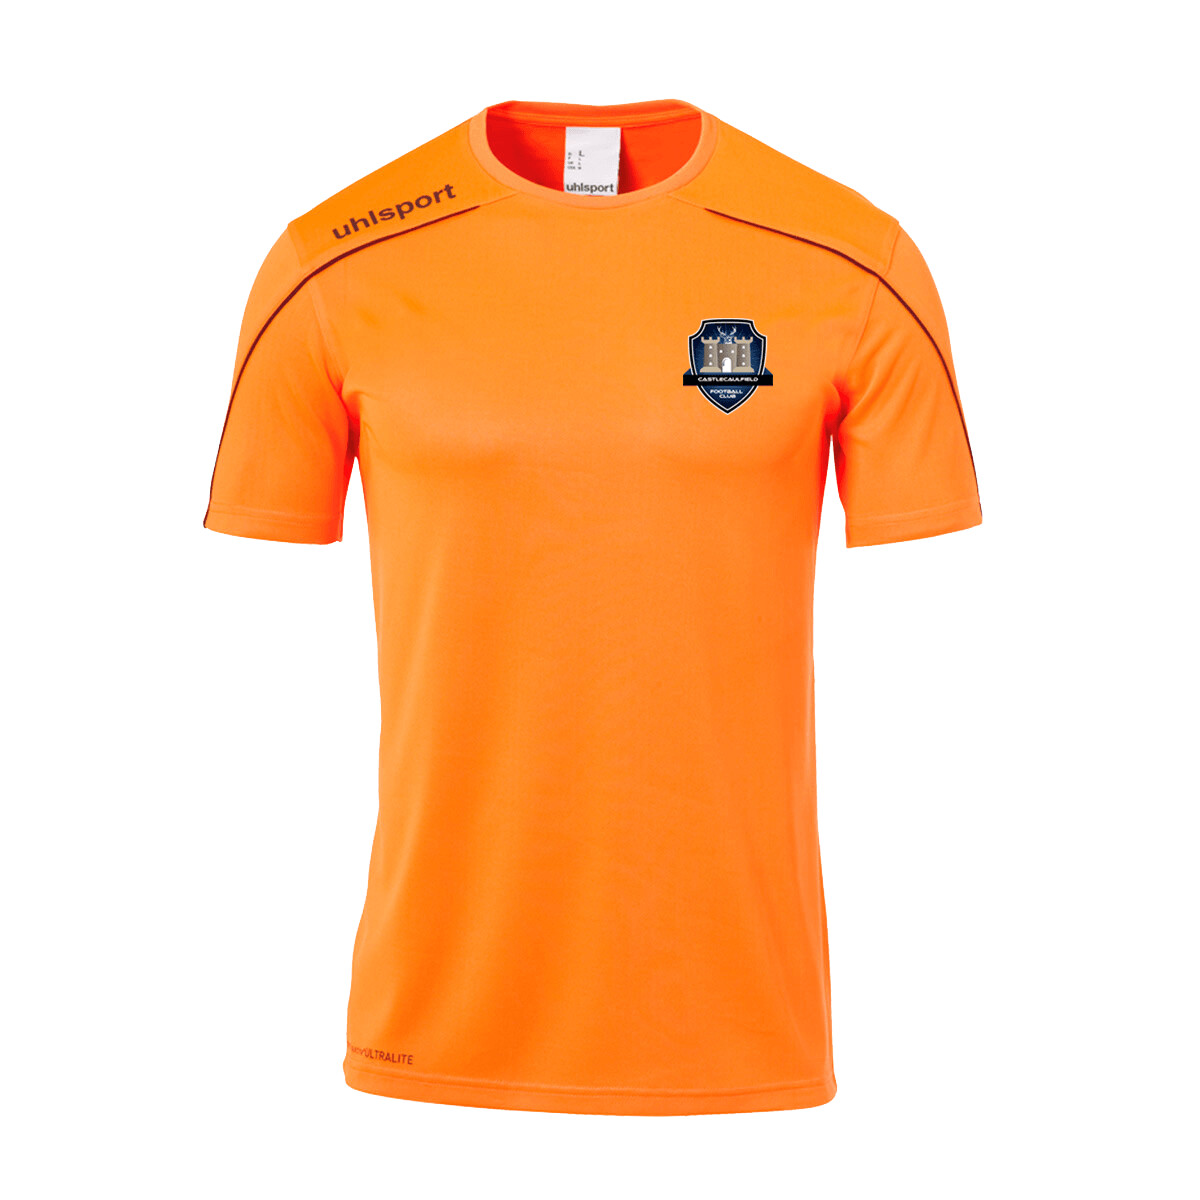 Official Castlecaulfield FC Orange Top